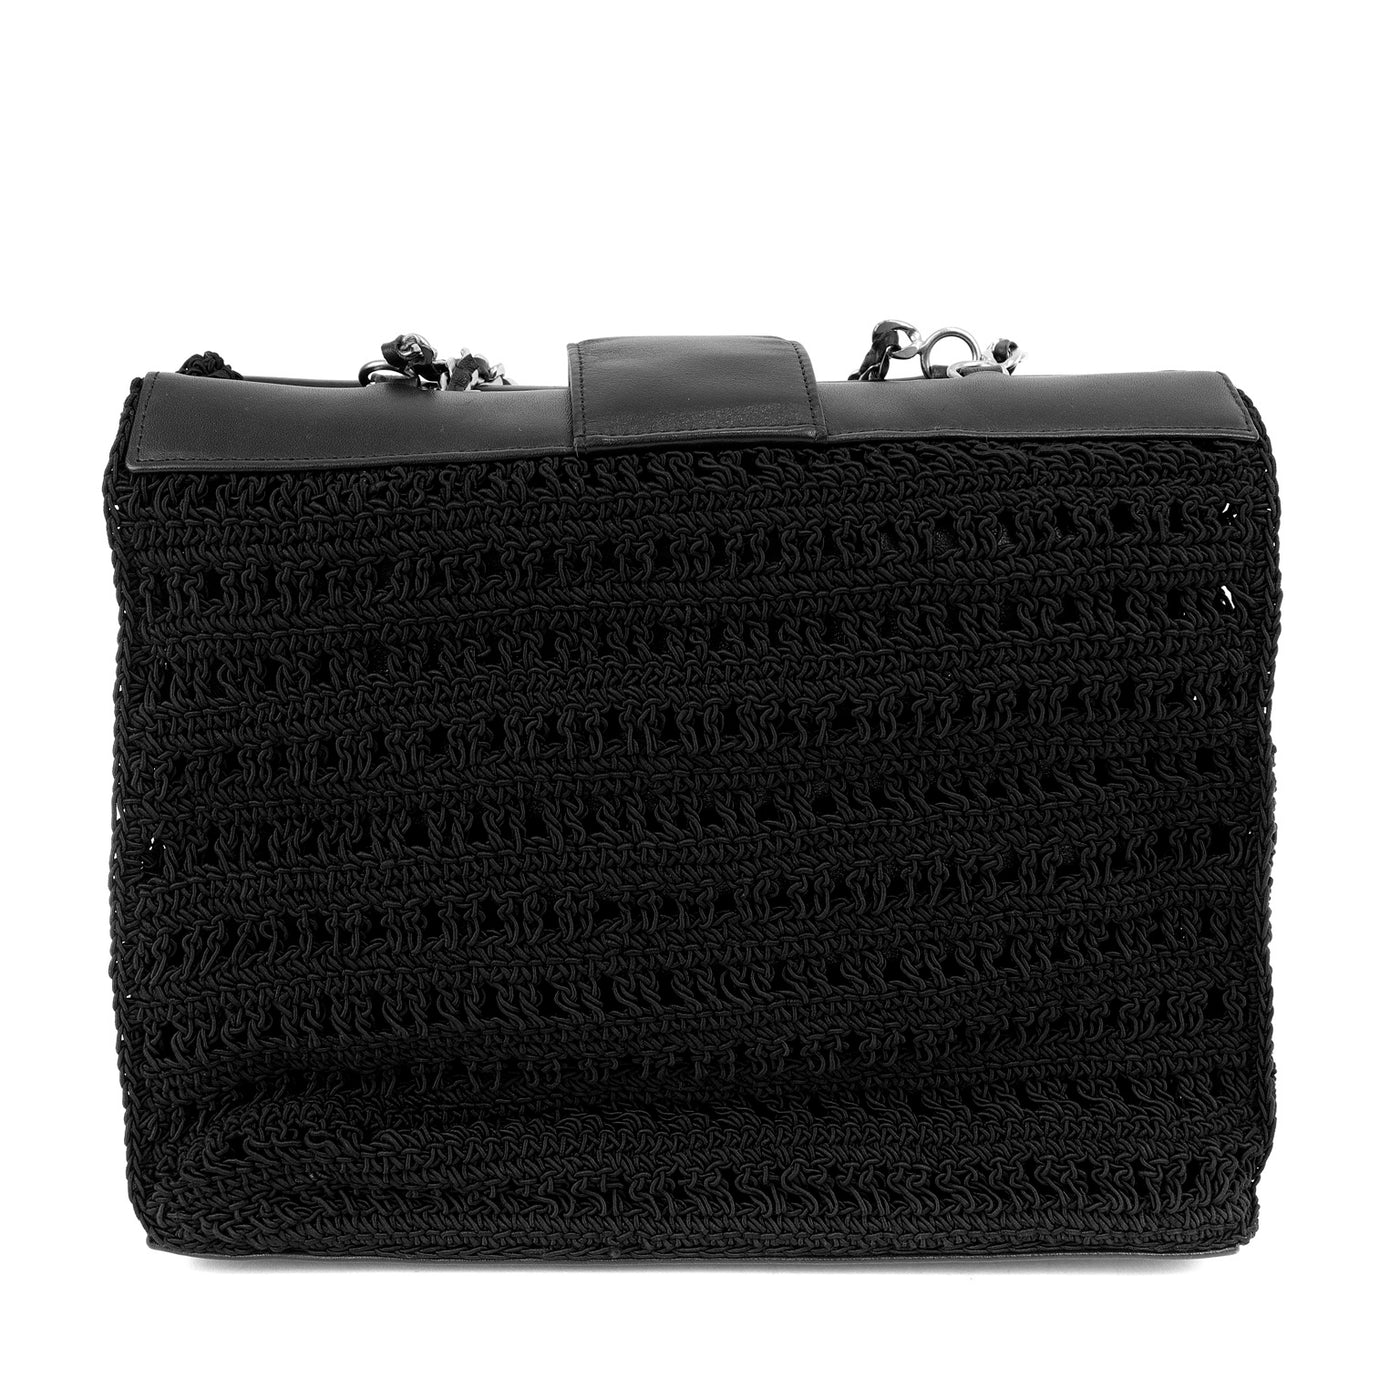 Chanel Black Crocheted Mini Tote with Silver Hardware